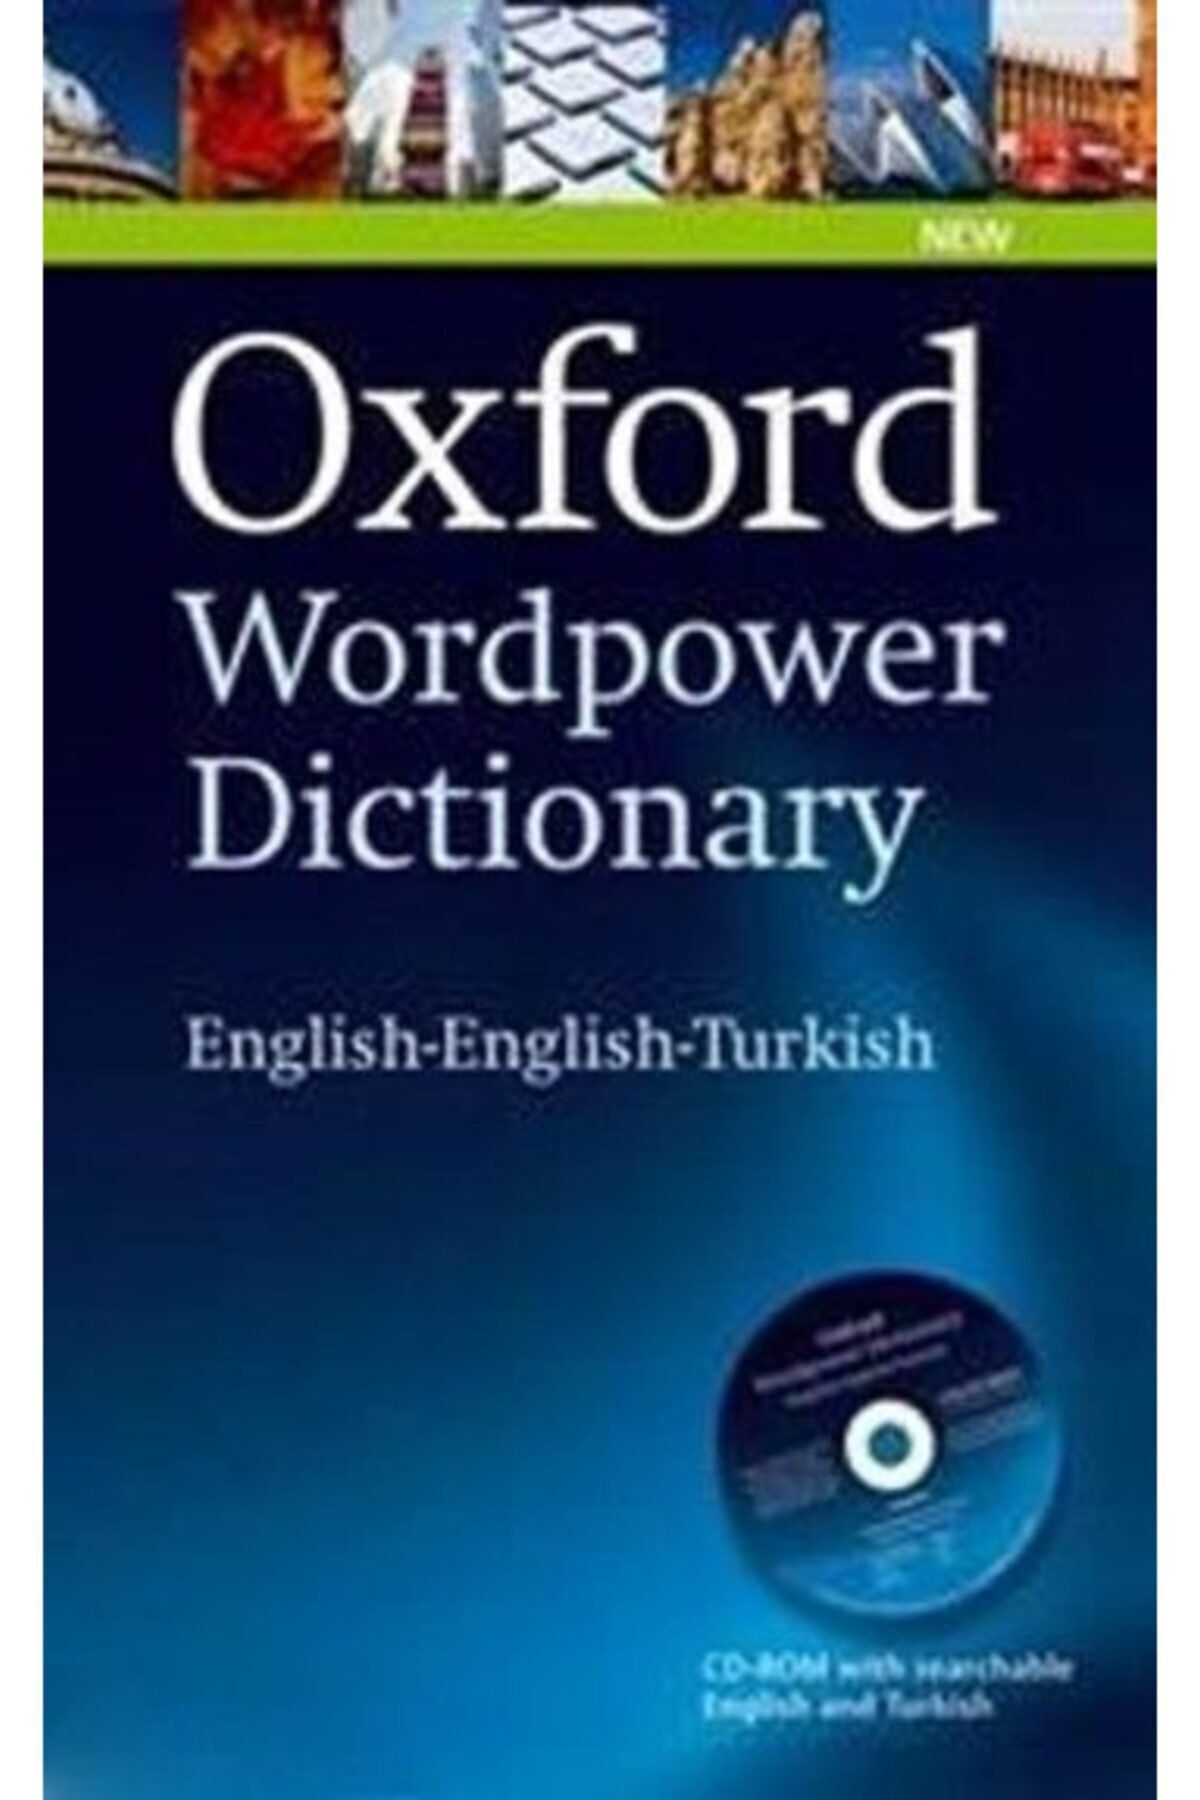 Genel Markalar Oxford Wordpower Dictionary Bandrollü Wordpower Dictionary With Cd Engish-English-Turkish